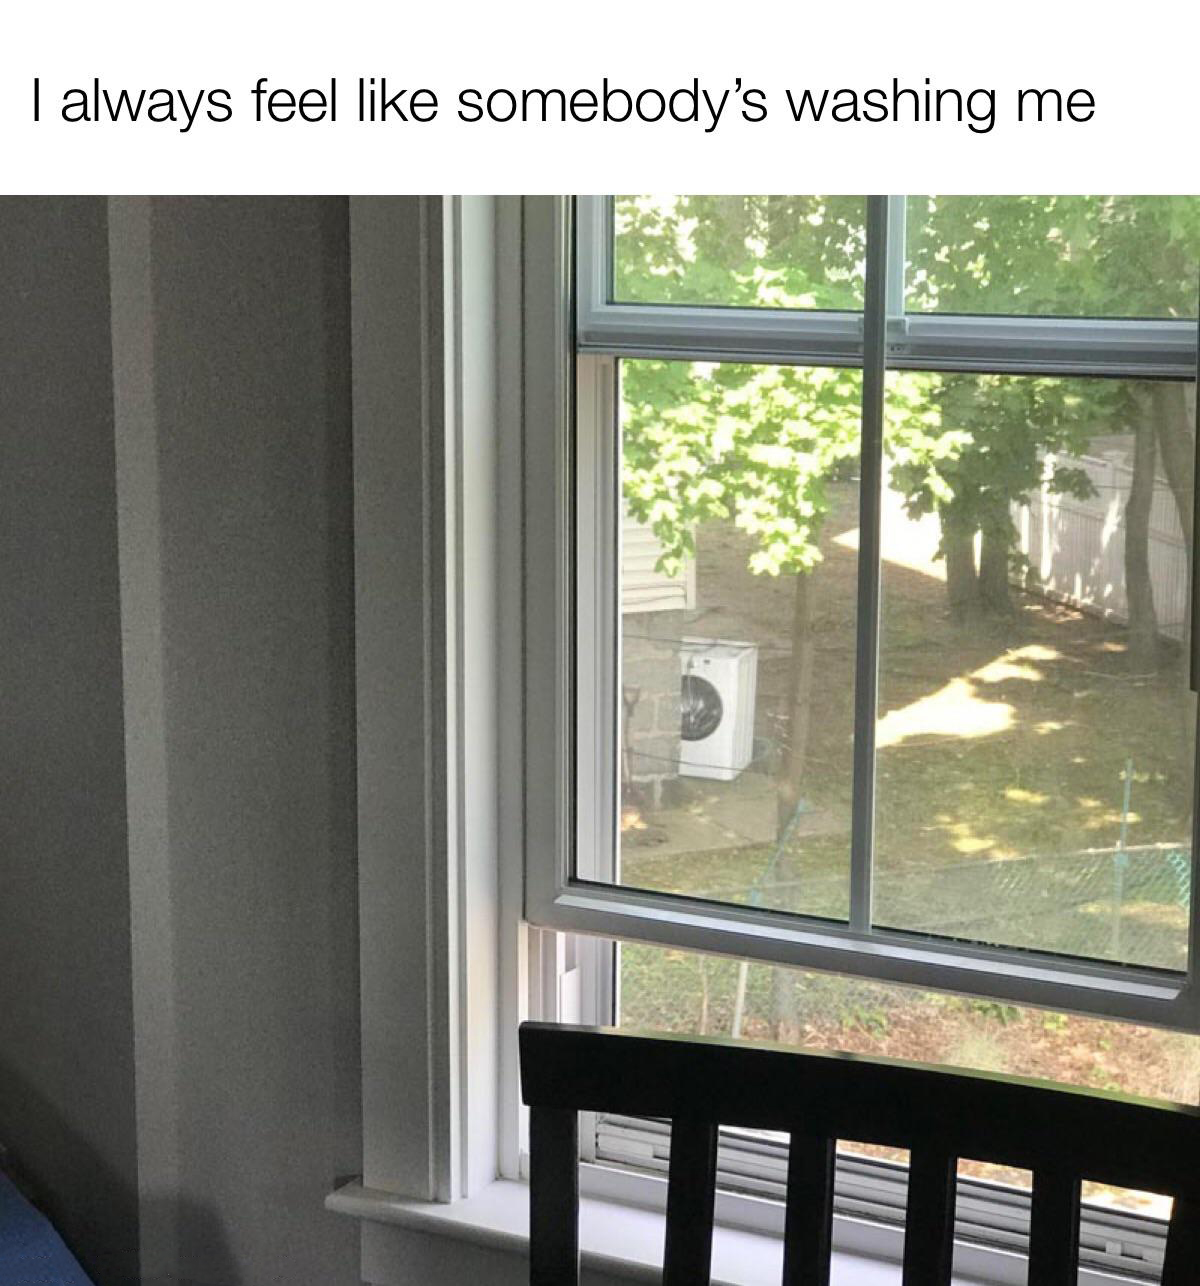 hilarious memes - sometimes i feel like somebody's washing me - I always feel somebody's washing me